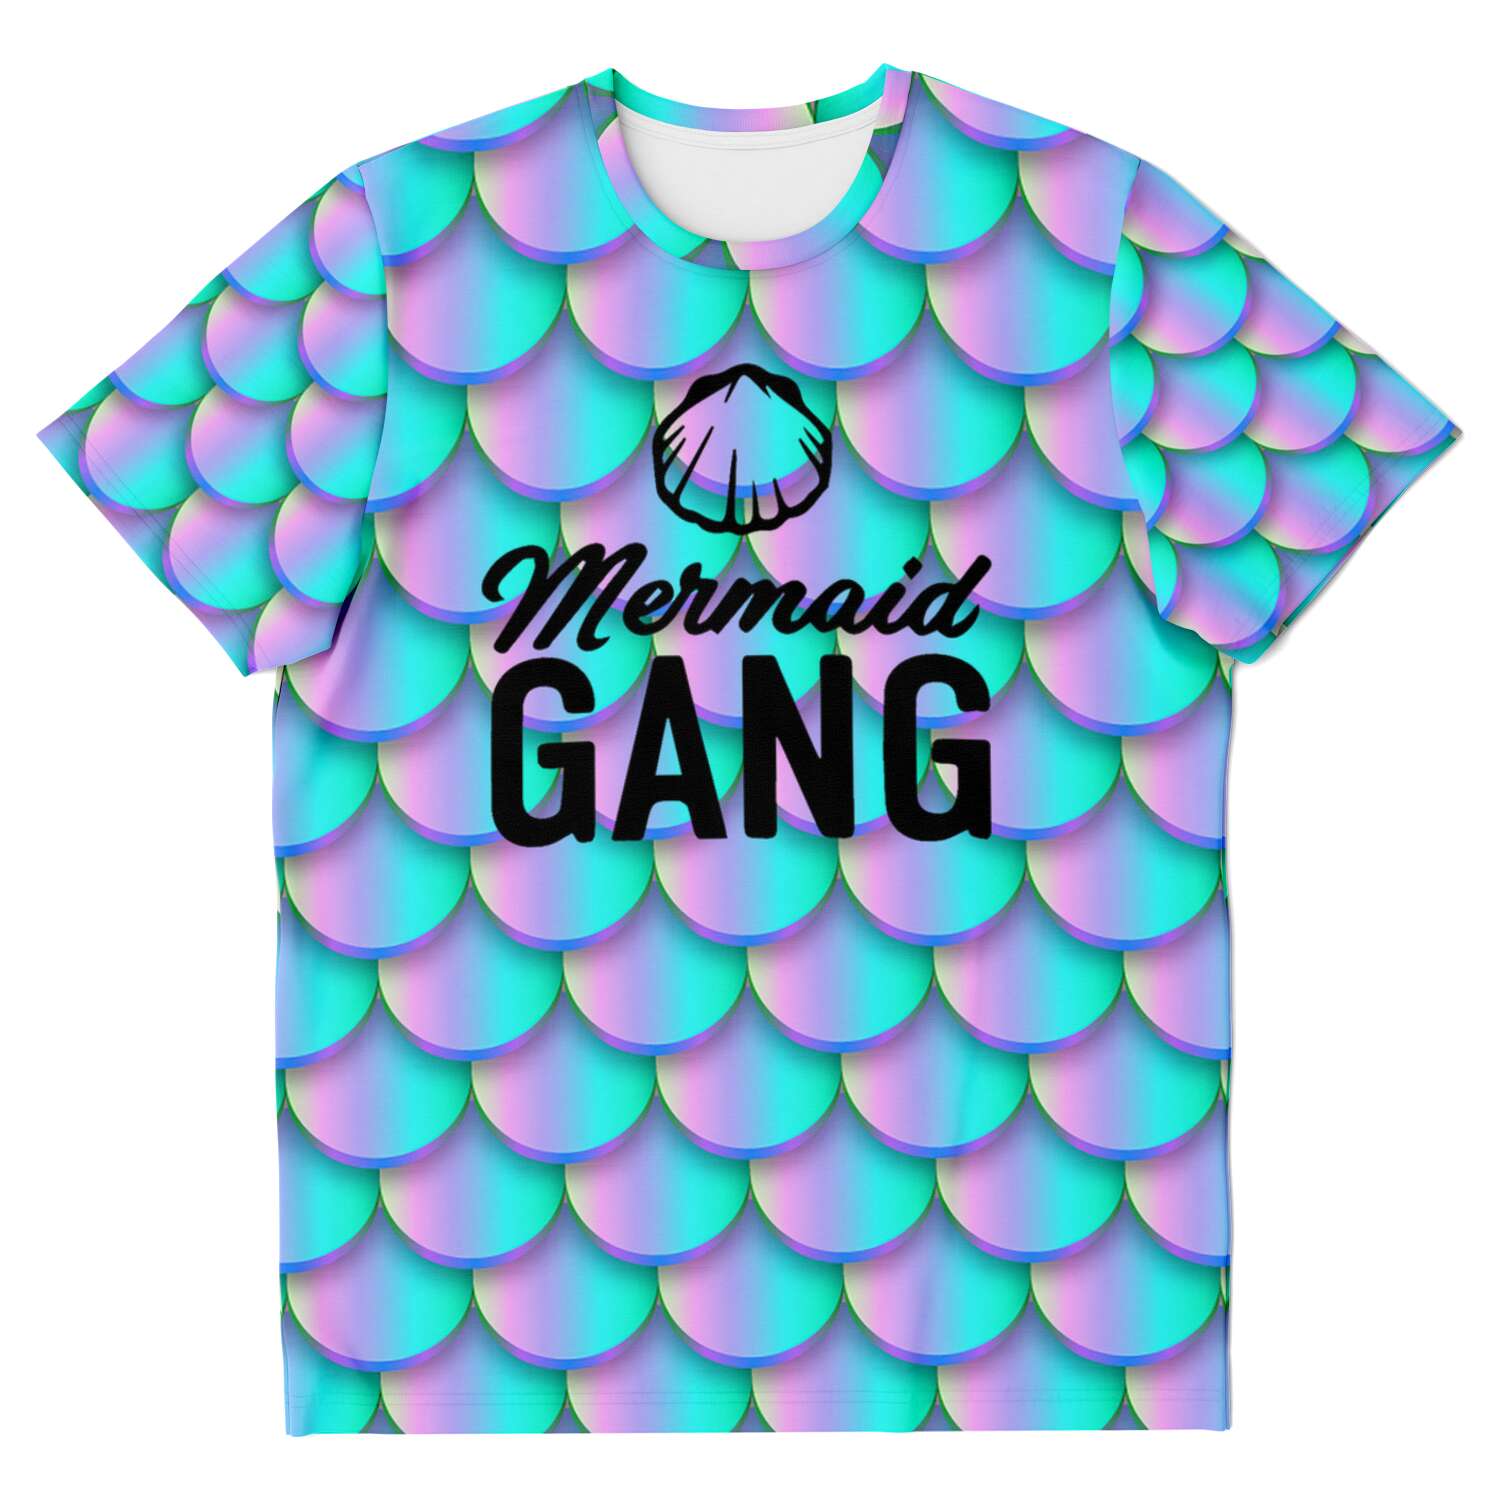 MERMAID GANG T-shirt